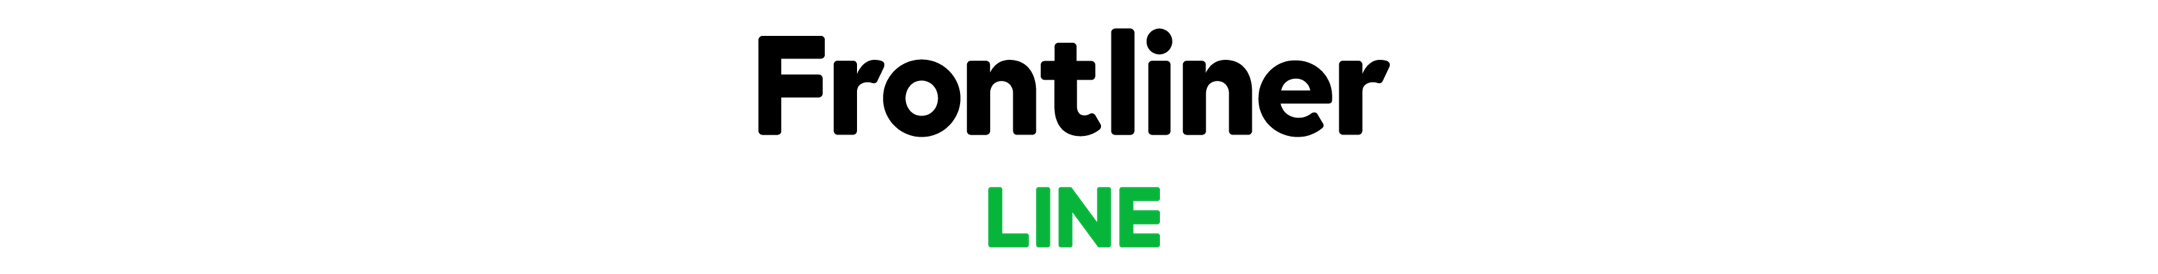 LINE Frontliner